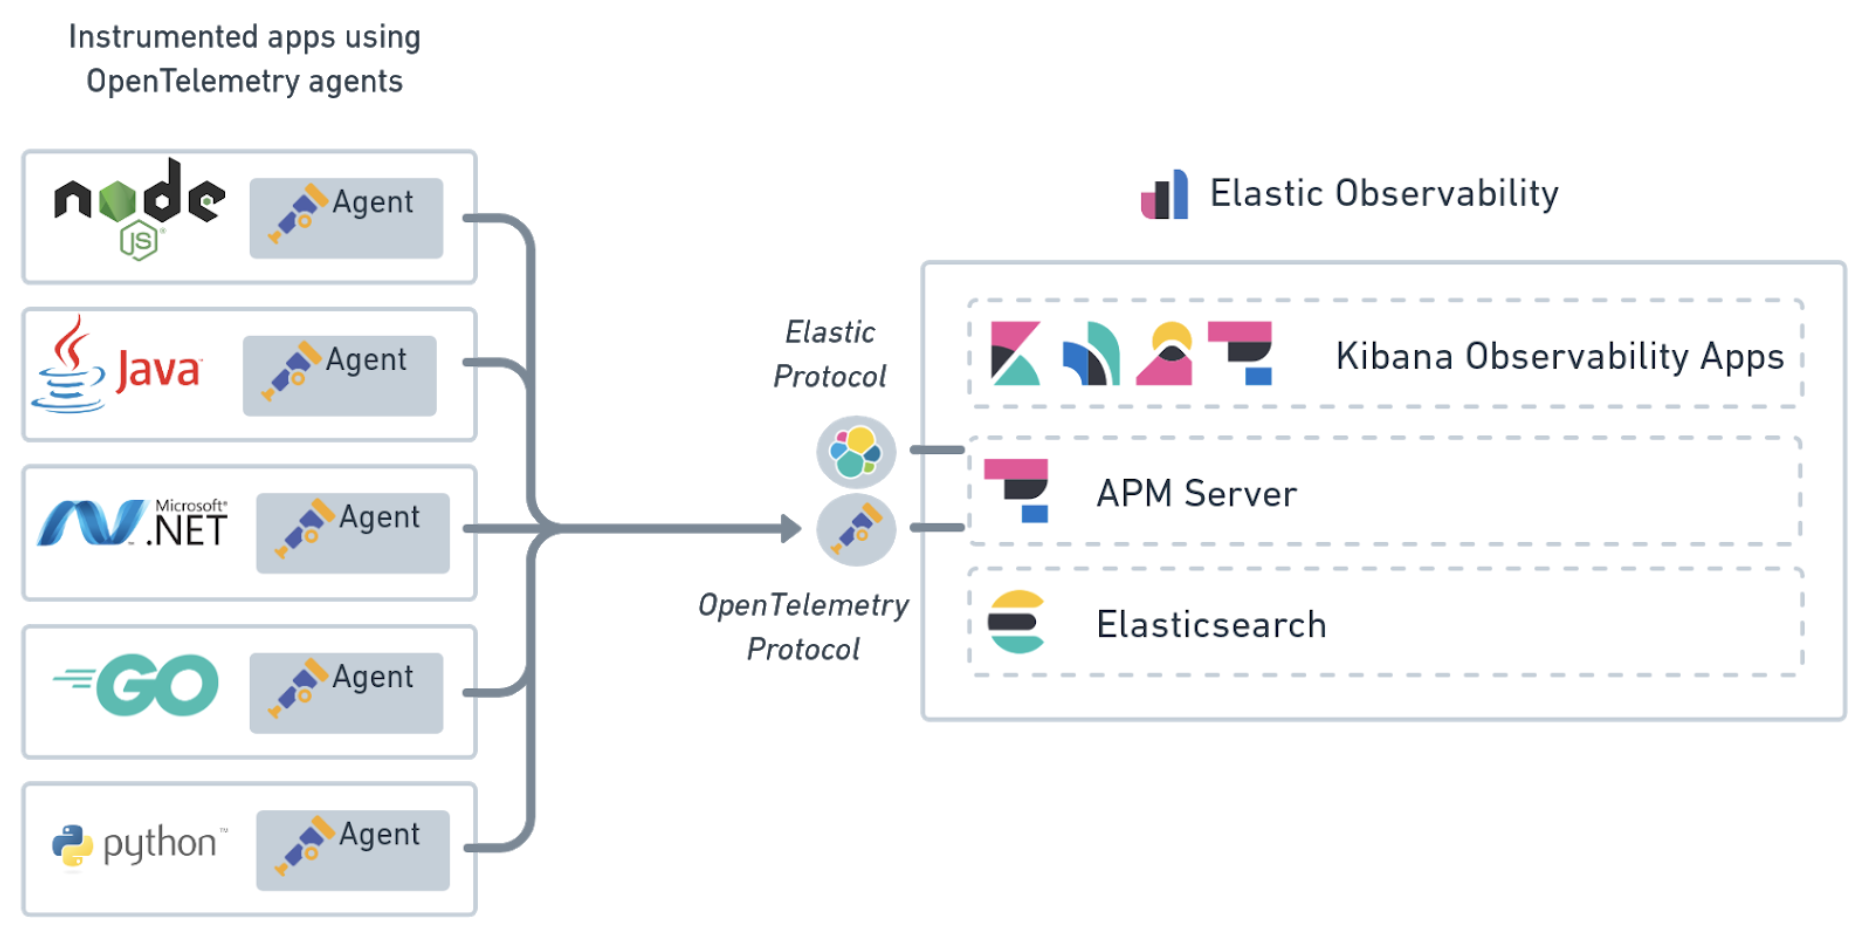 OpenTelemetry Elastic protocol architecture diagram